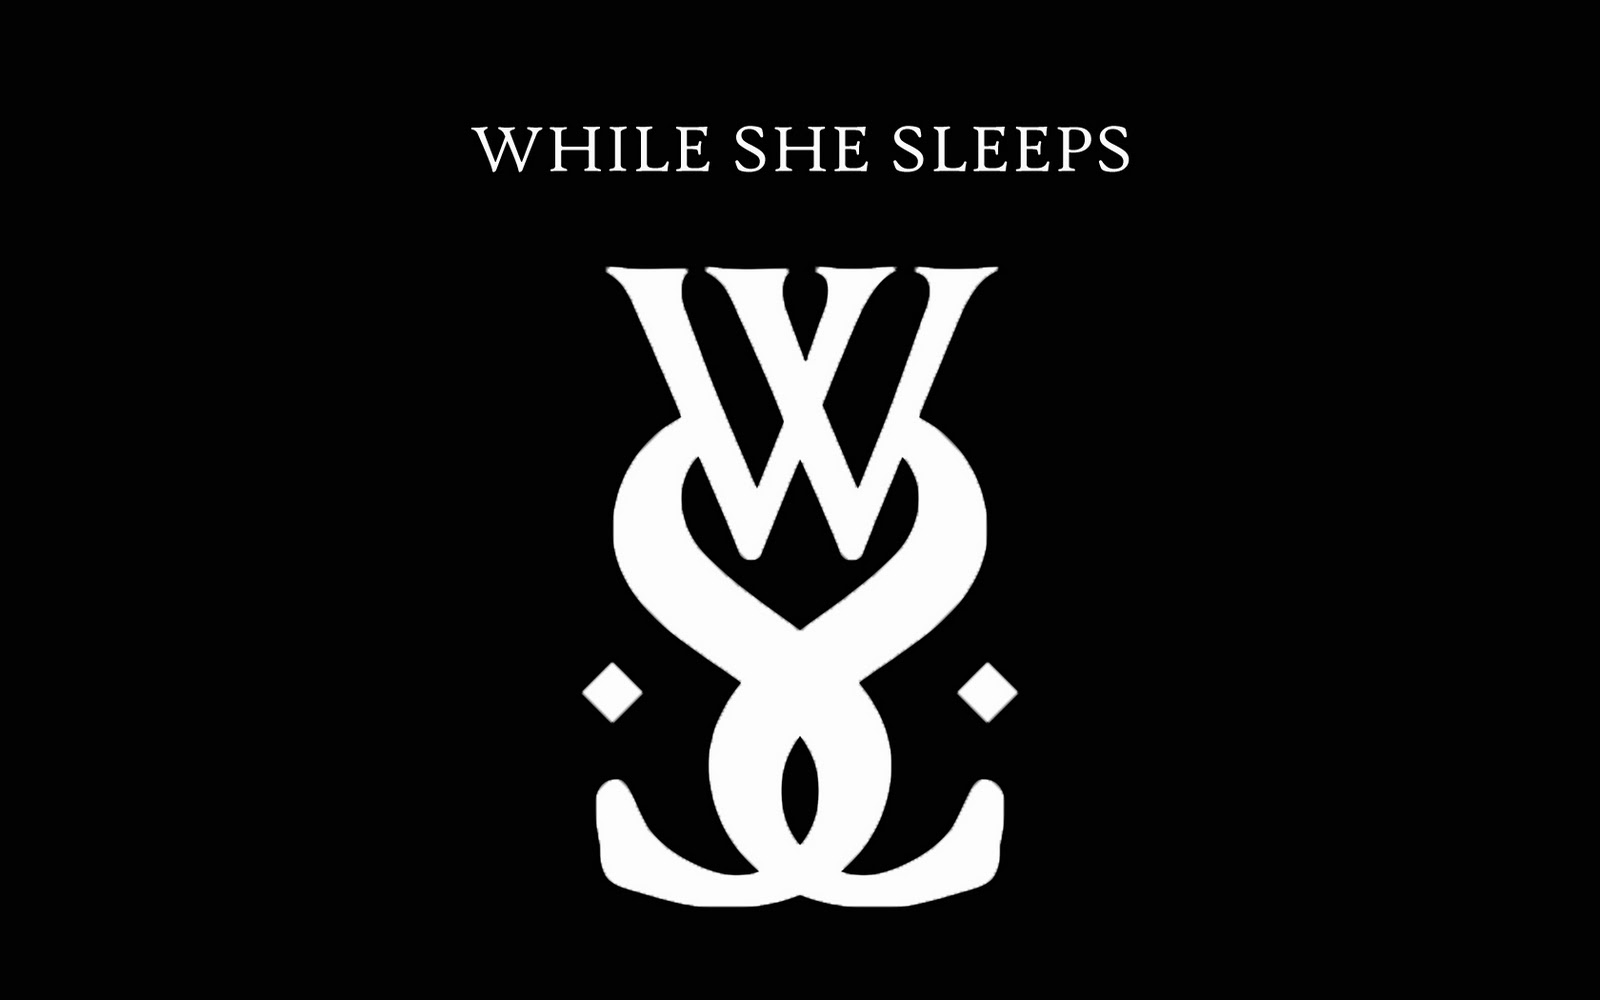 While She Sleeps Music Band Simple Wallpaper While She Sleeps